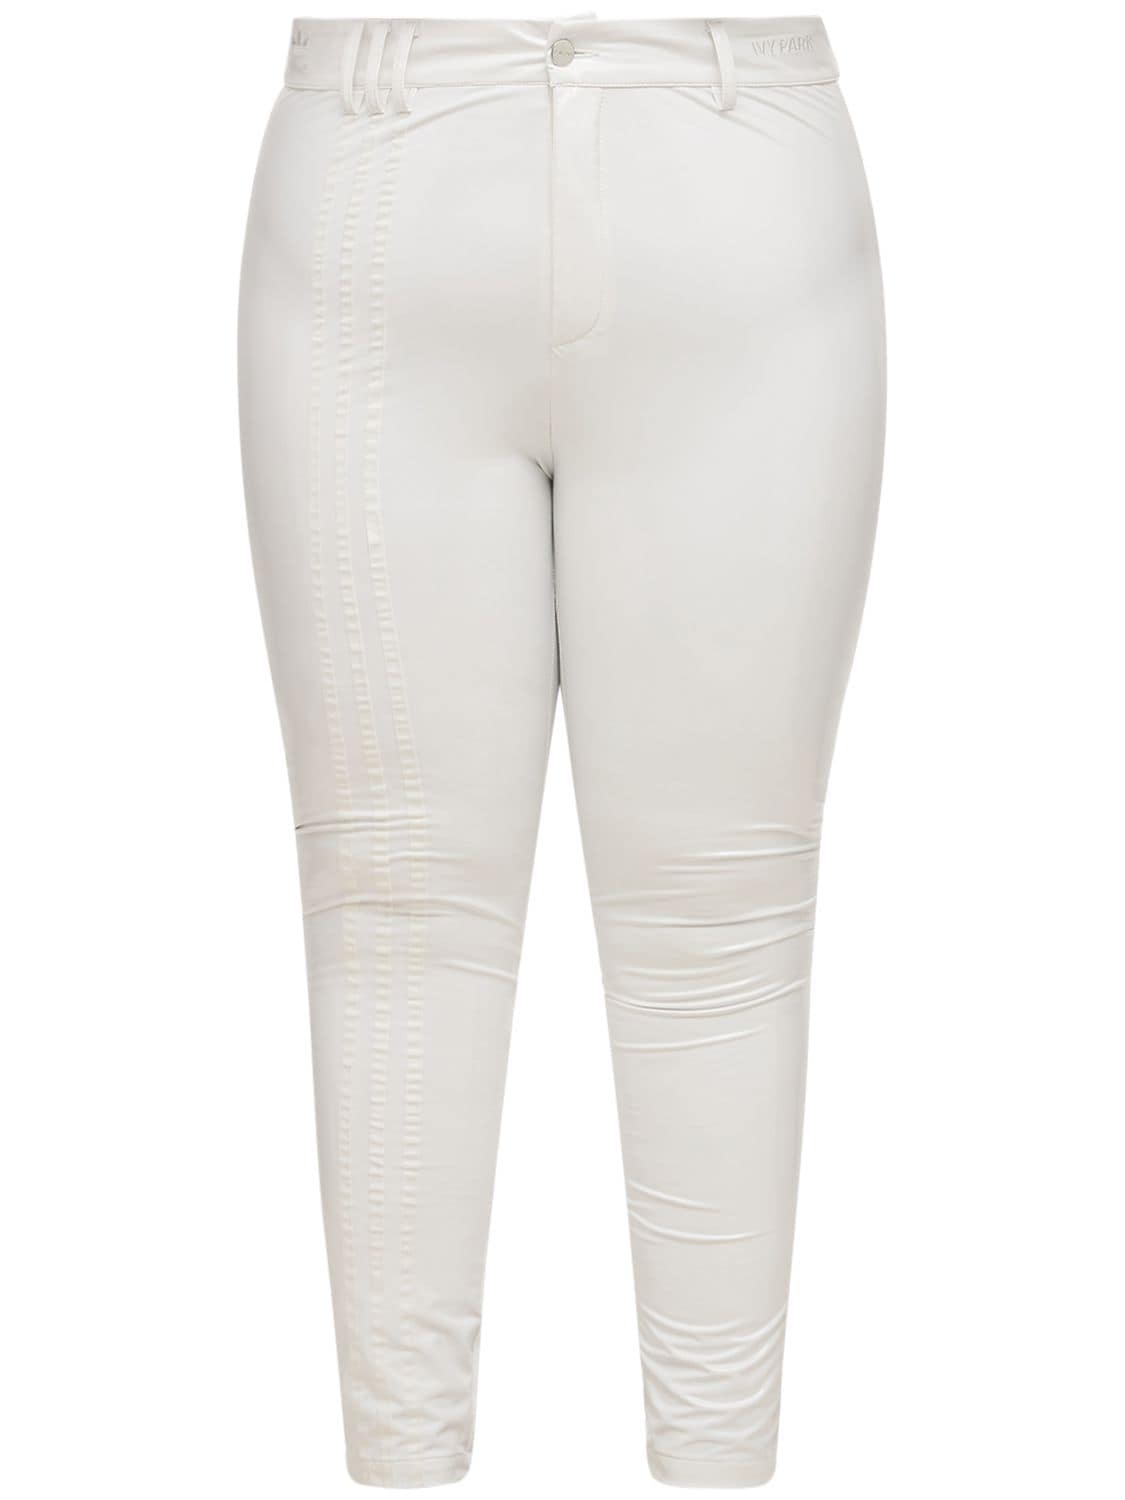 Adidas X Ivy Park 3-stripes High Waist Latex Pants In White